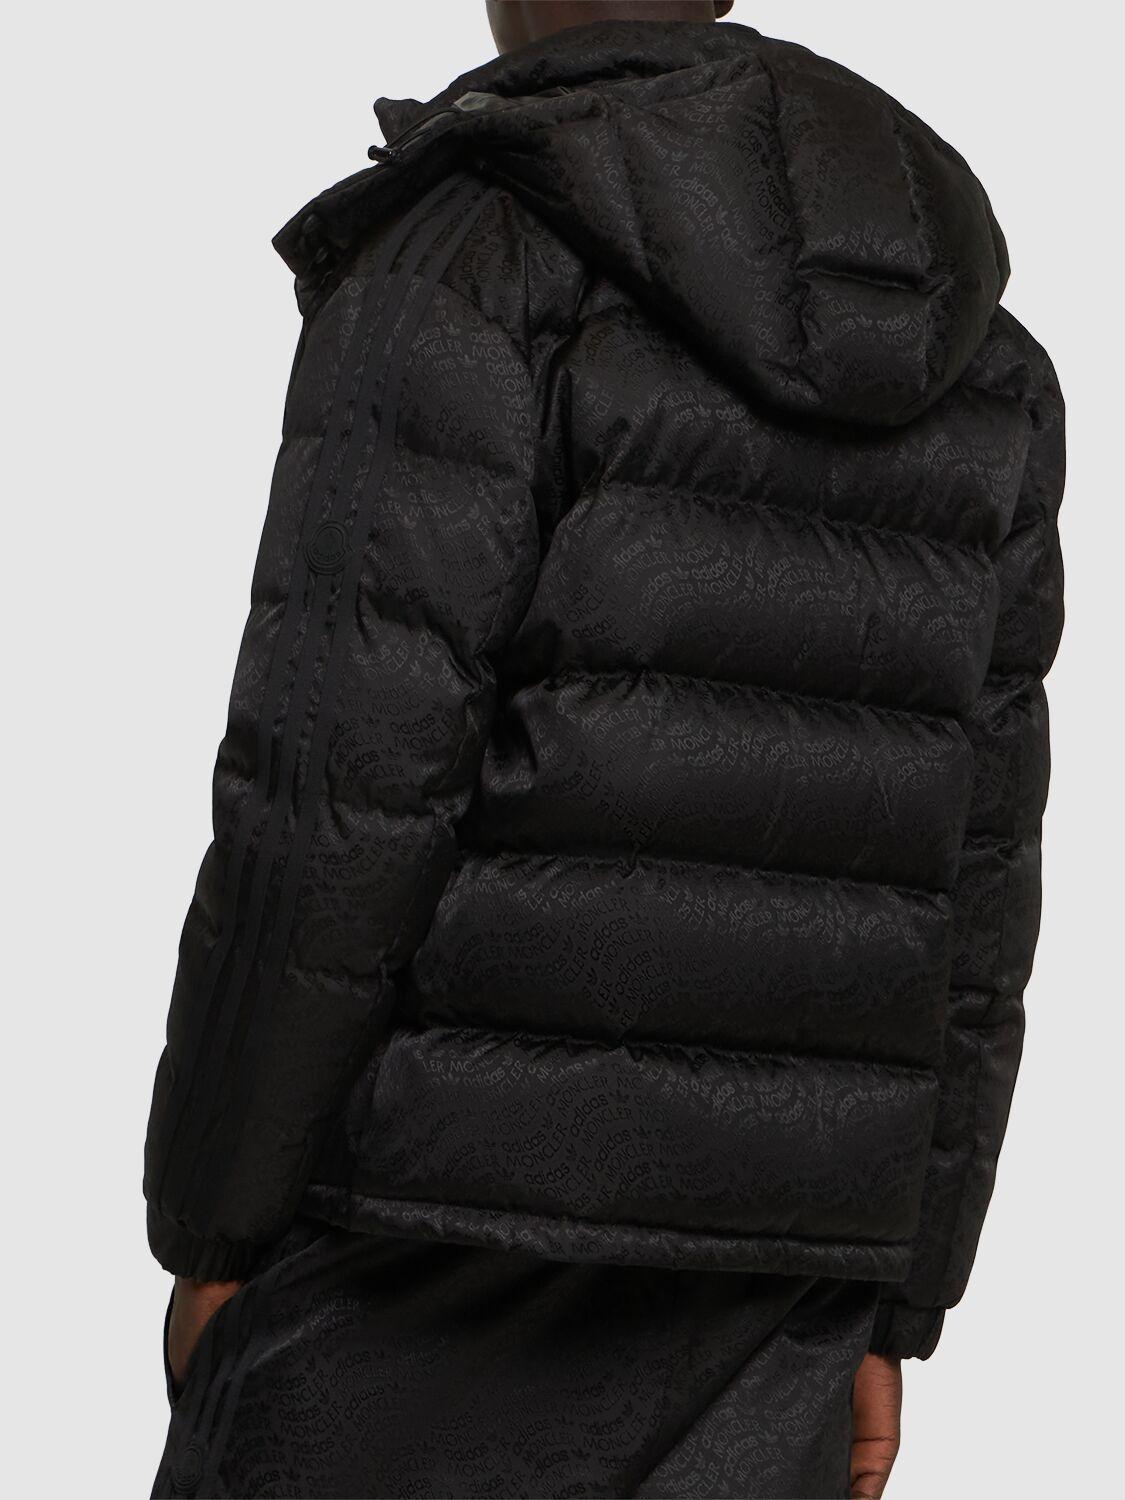 Moncler Genius Moncler X Adidas Alpbach Down Jacket in Black for Men | Lyst